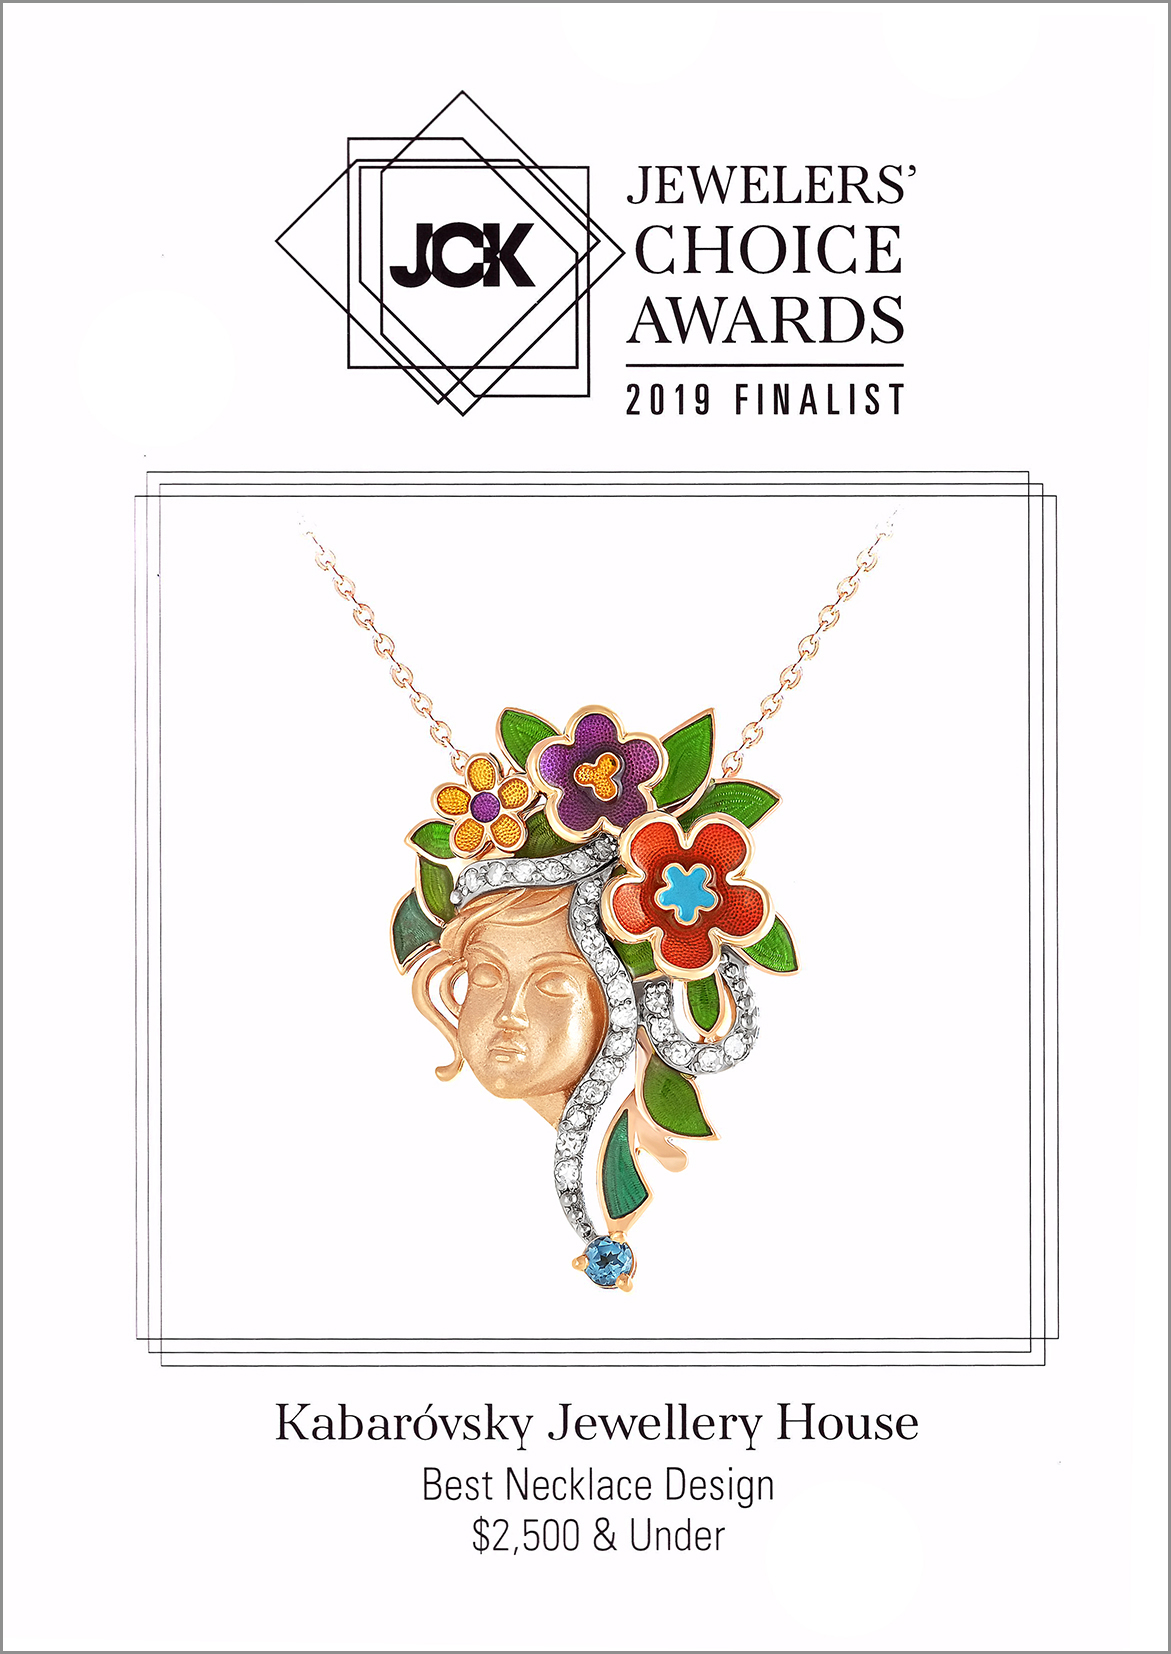 JCK Jewelers’ Choice Awards